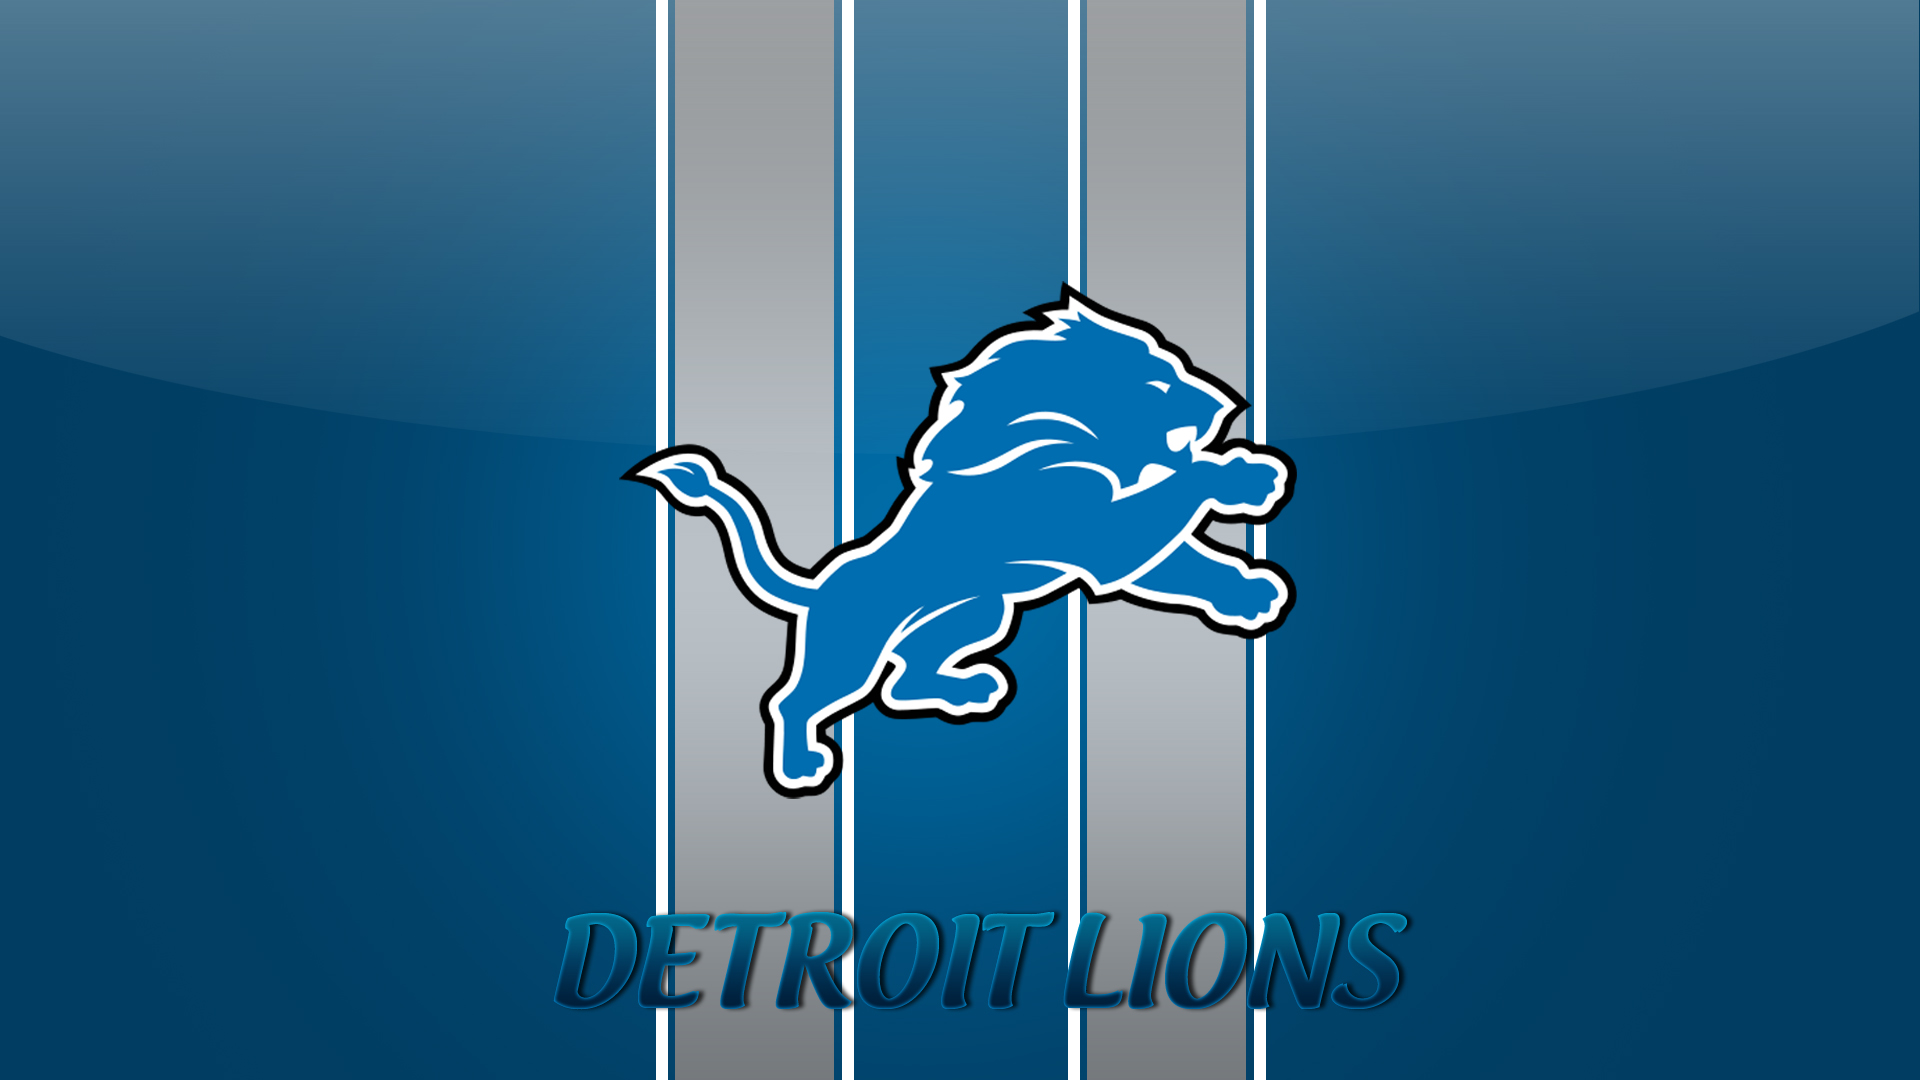 DETROIT LIONS nfl football f wallpaper 1920x1080 155114